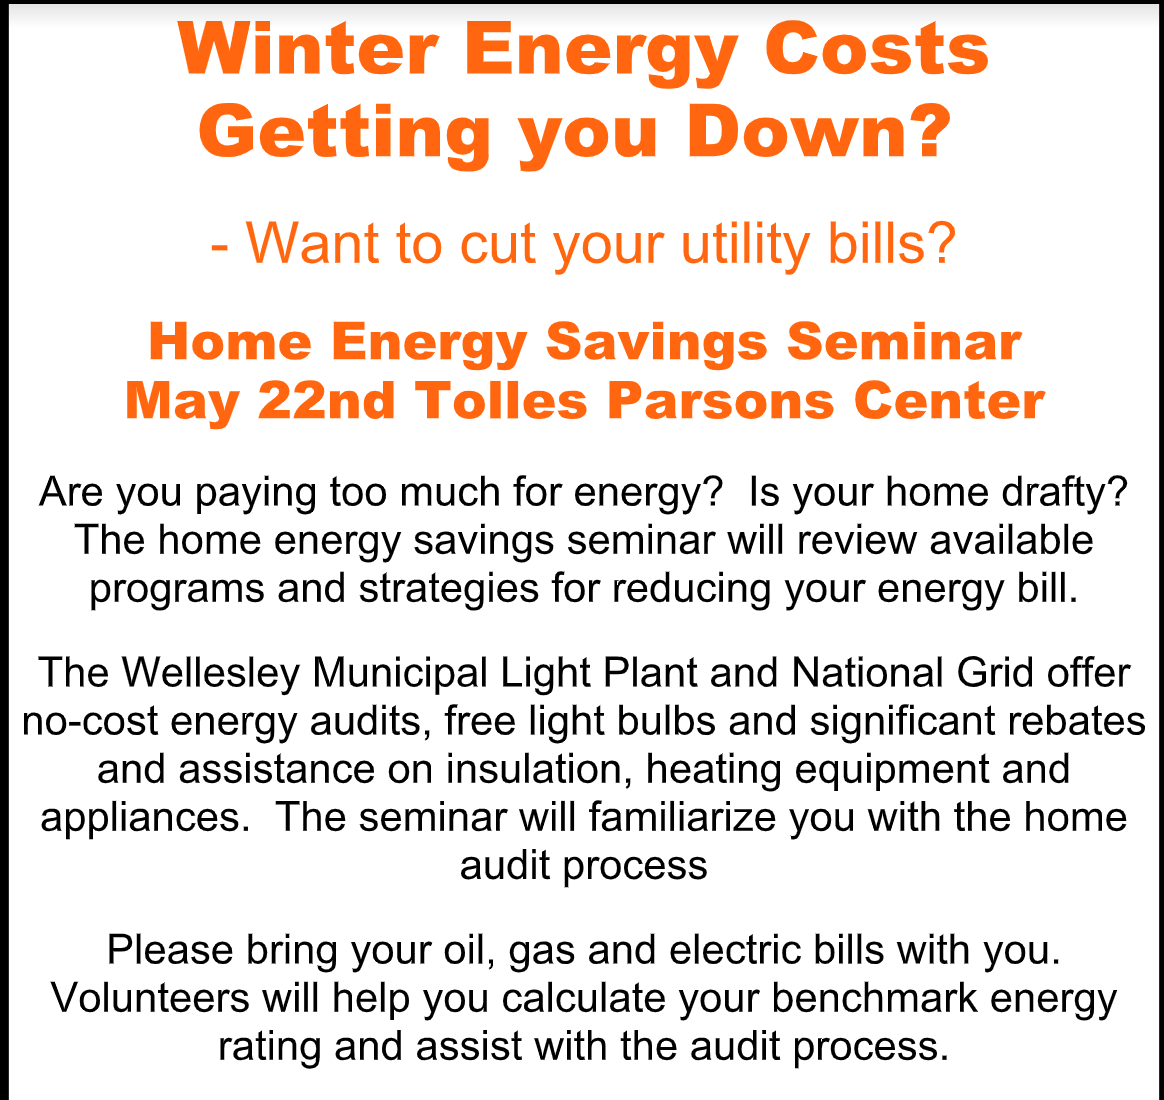 Energy savings, Wellesley